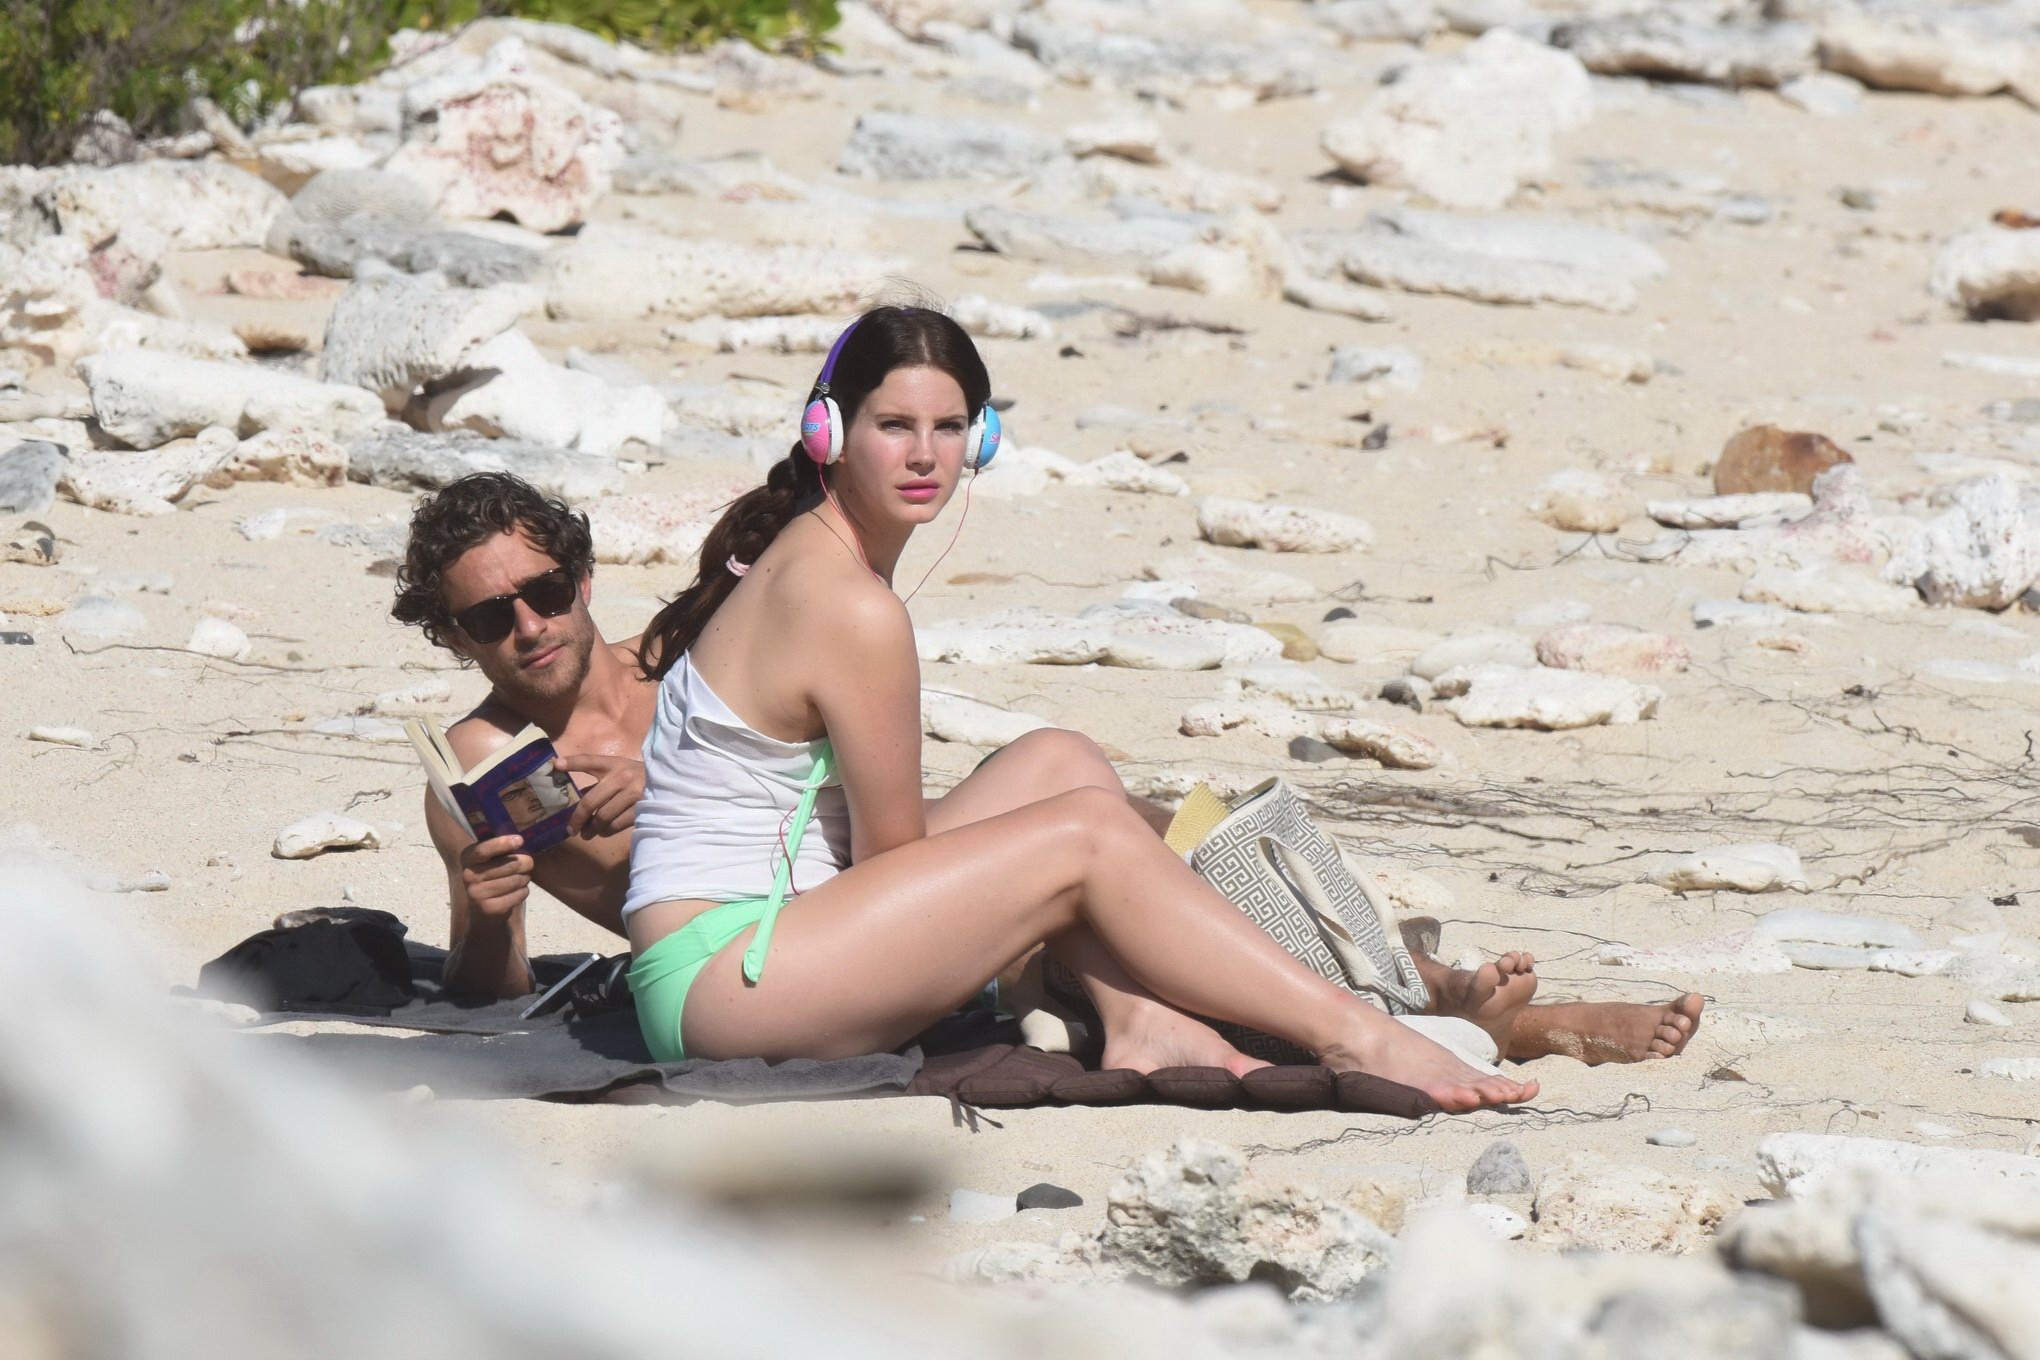 Lana del rey portant un bikini vert sur la plage de st barts
 #75176871